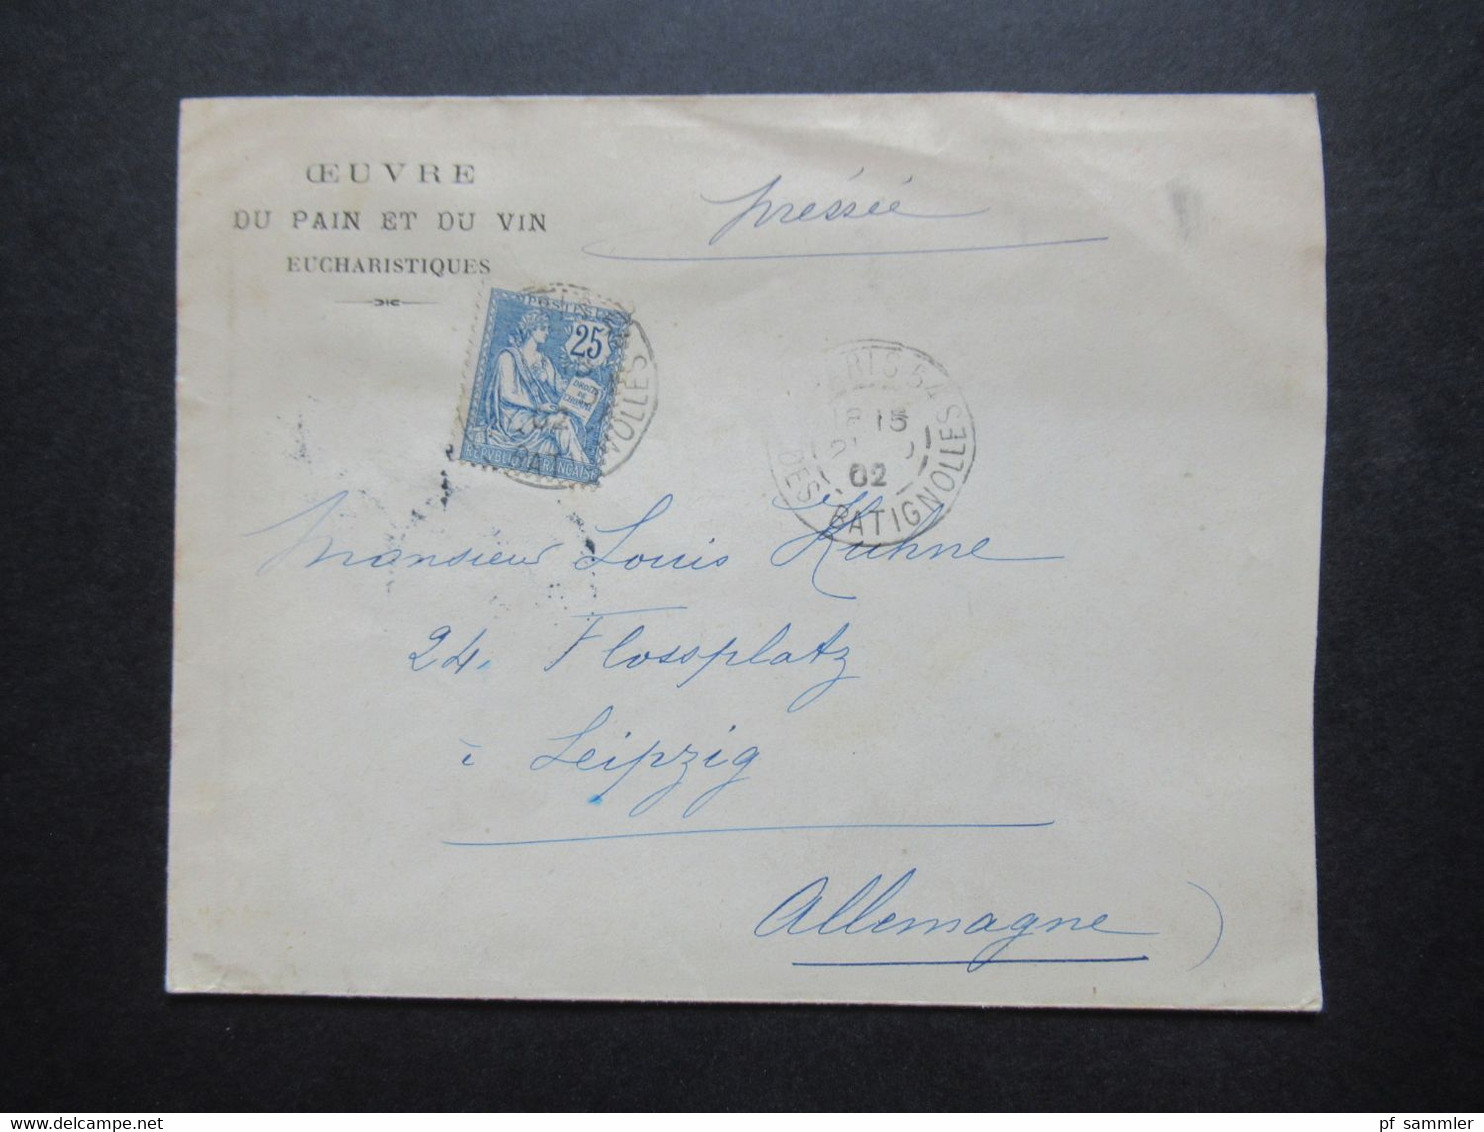 Frankreich 1900 Allegorie Nr.94 EF Umschlag Ceuvre Du Pain Et Du Vin Auslandsbrief Paris - Leipzig Mit Ank. Stempel - Lettres & Documents